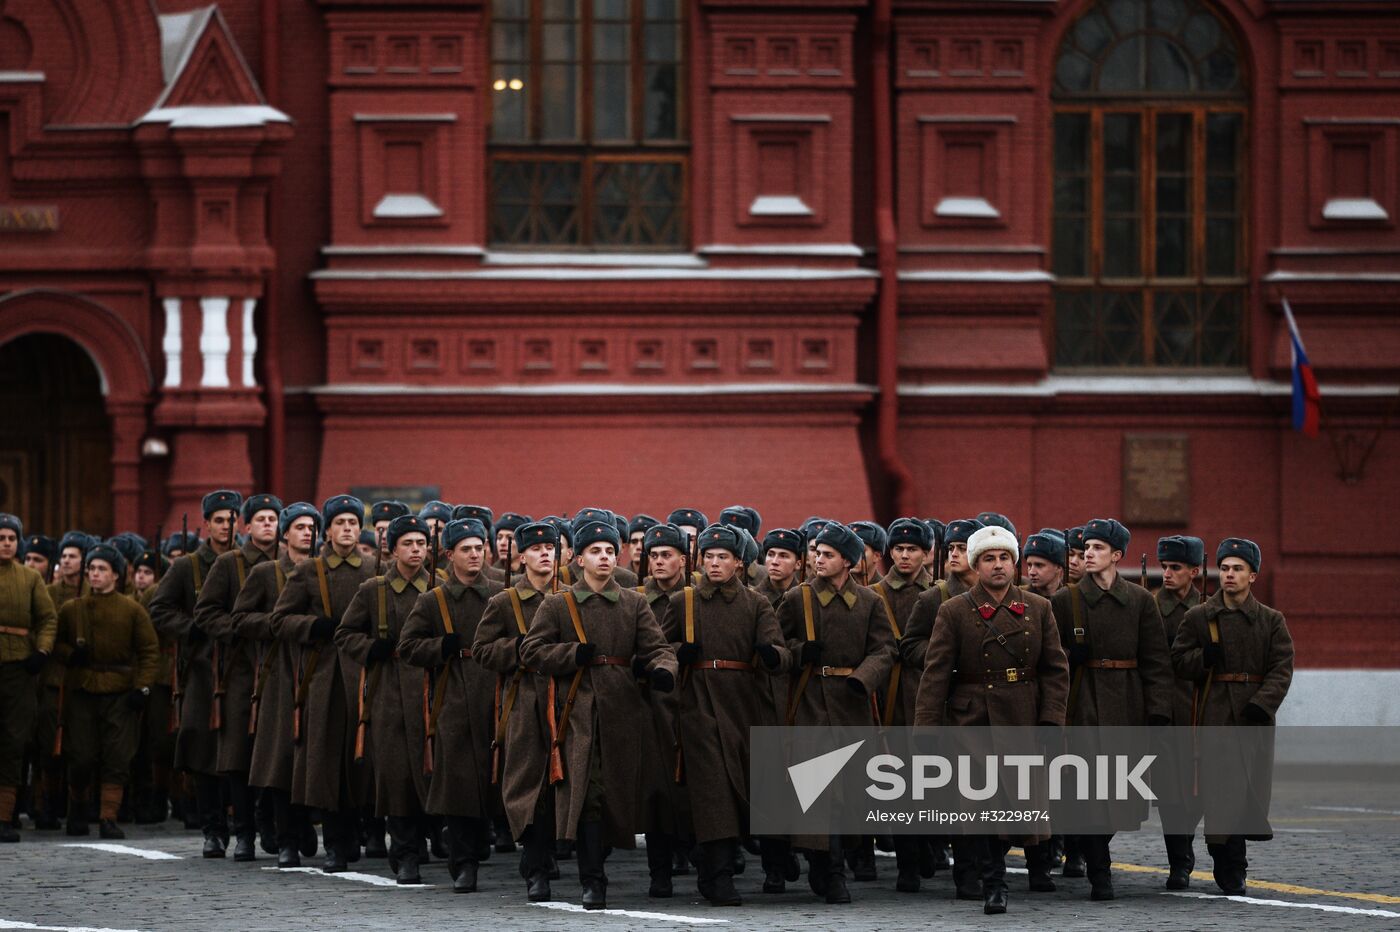 March marking 76th anniversary of November 7, 1941, military parade